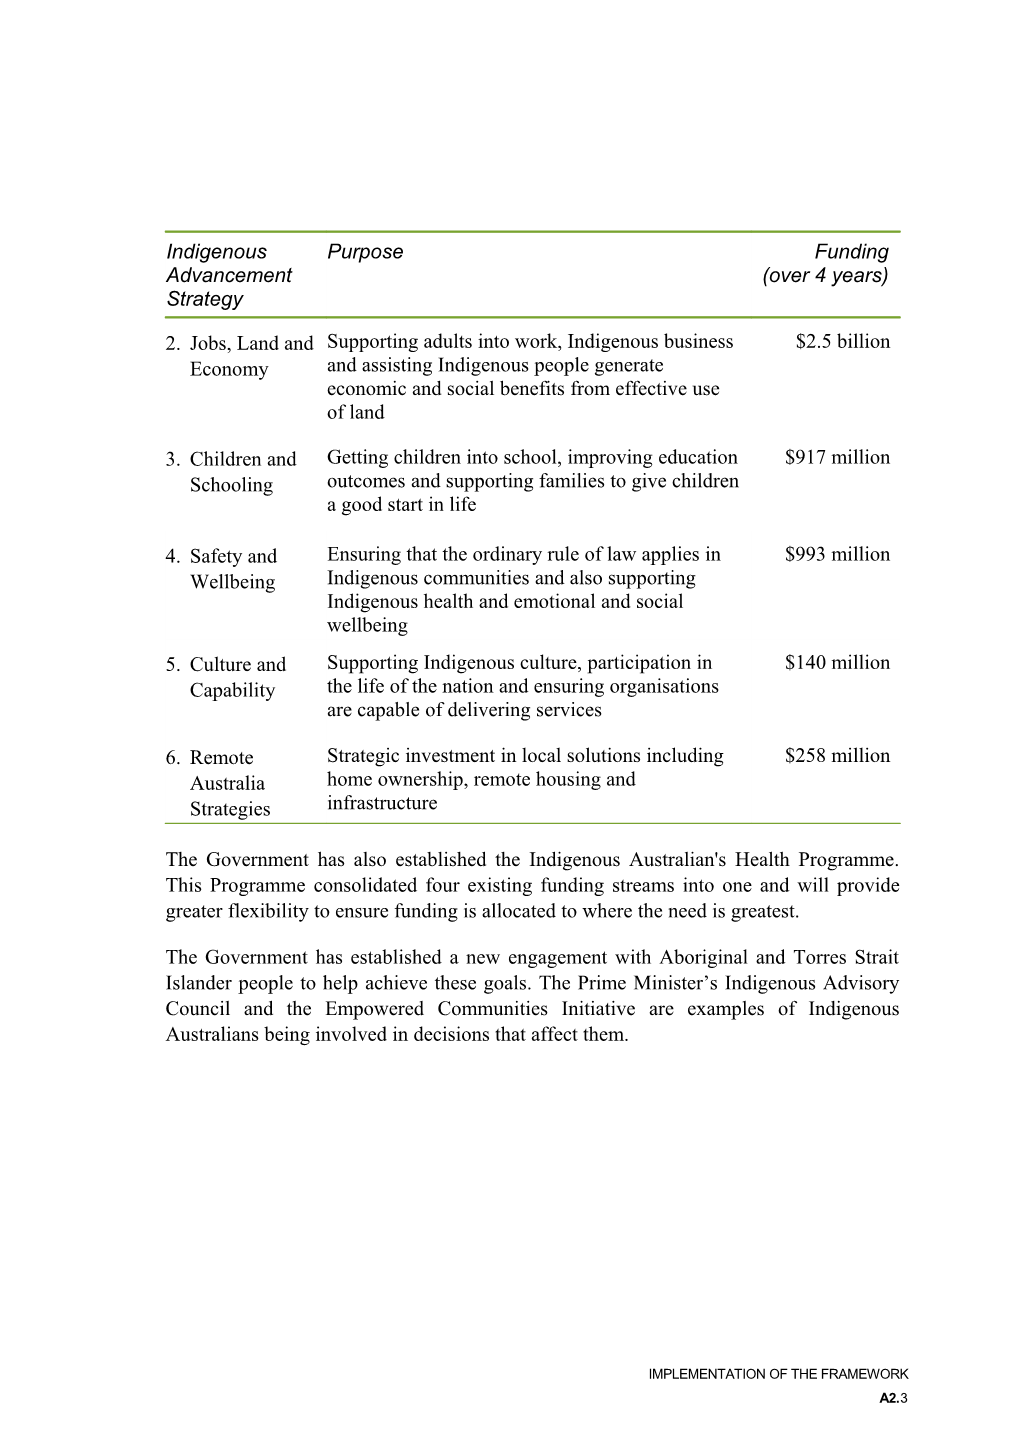 Appendix 2 Implementation of the Framework - Overcoming Indigenous Disadvantage - Key Indicators